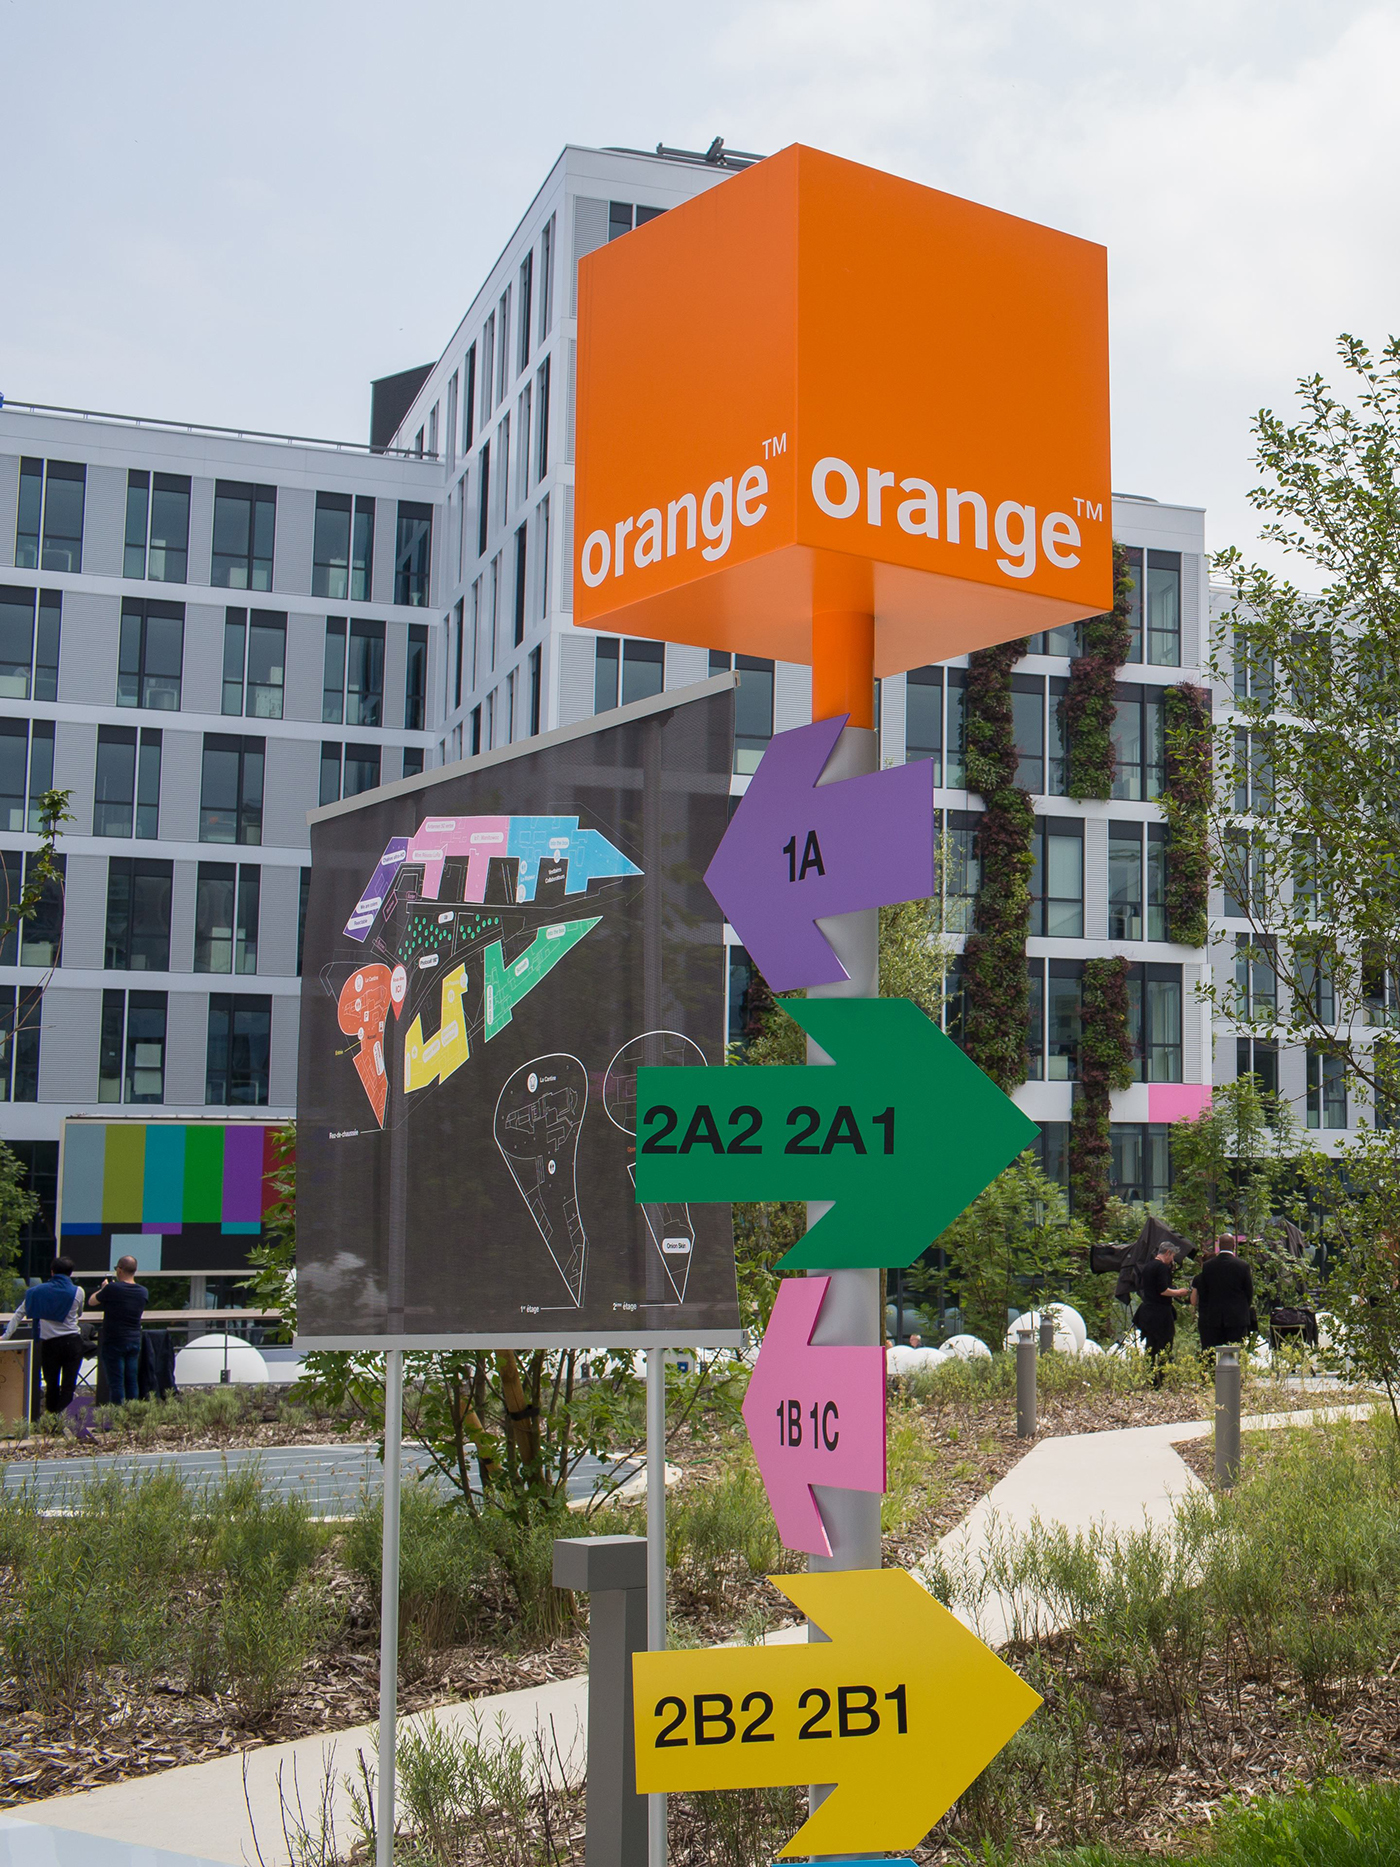 francois hollande Orange Gardens inauguration signalétique menu poster 3D 3D Printer leaf logo Geometrical black france company Picto